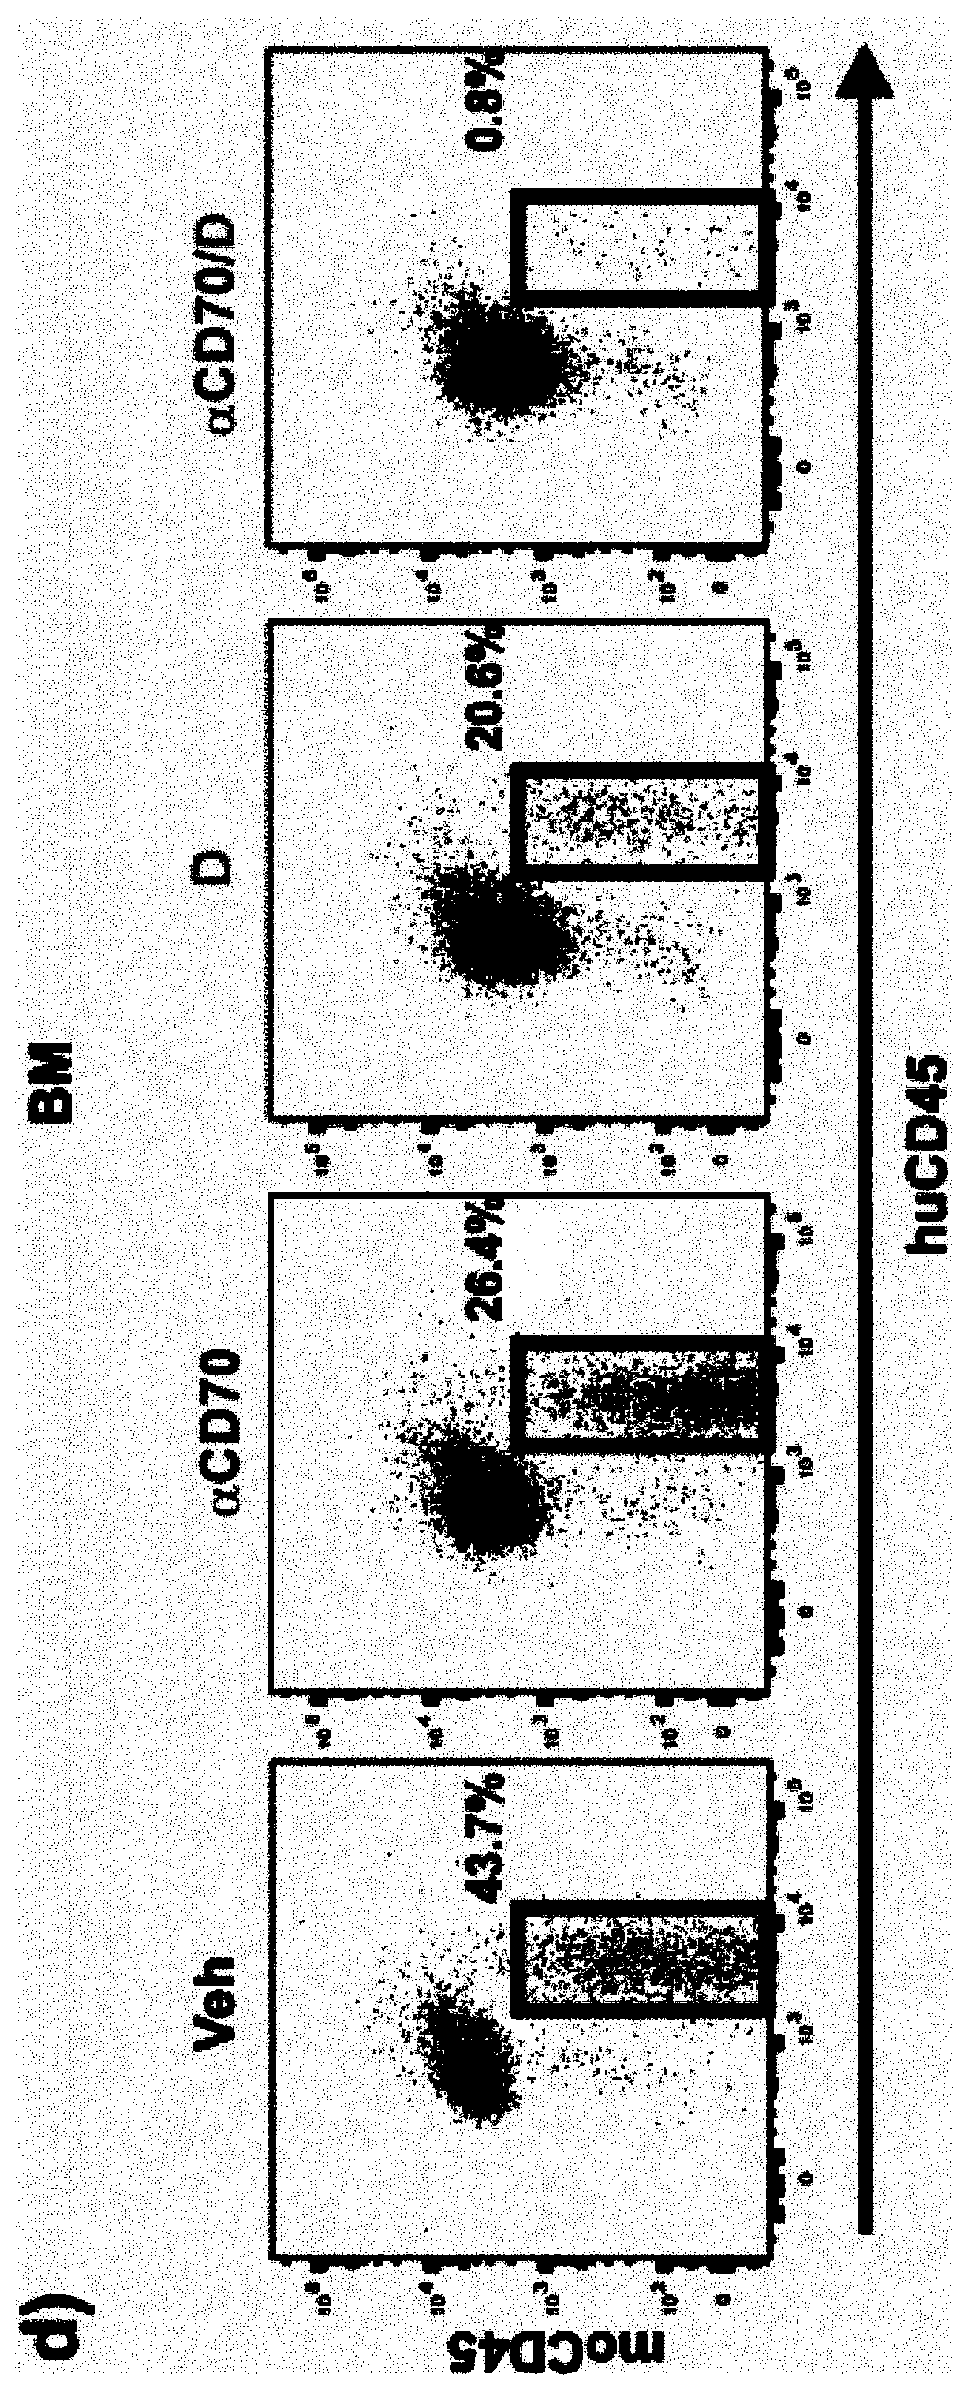 Use of anti cd70 antibody argx-110 to treat acute myeloid leukaemia